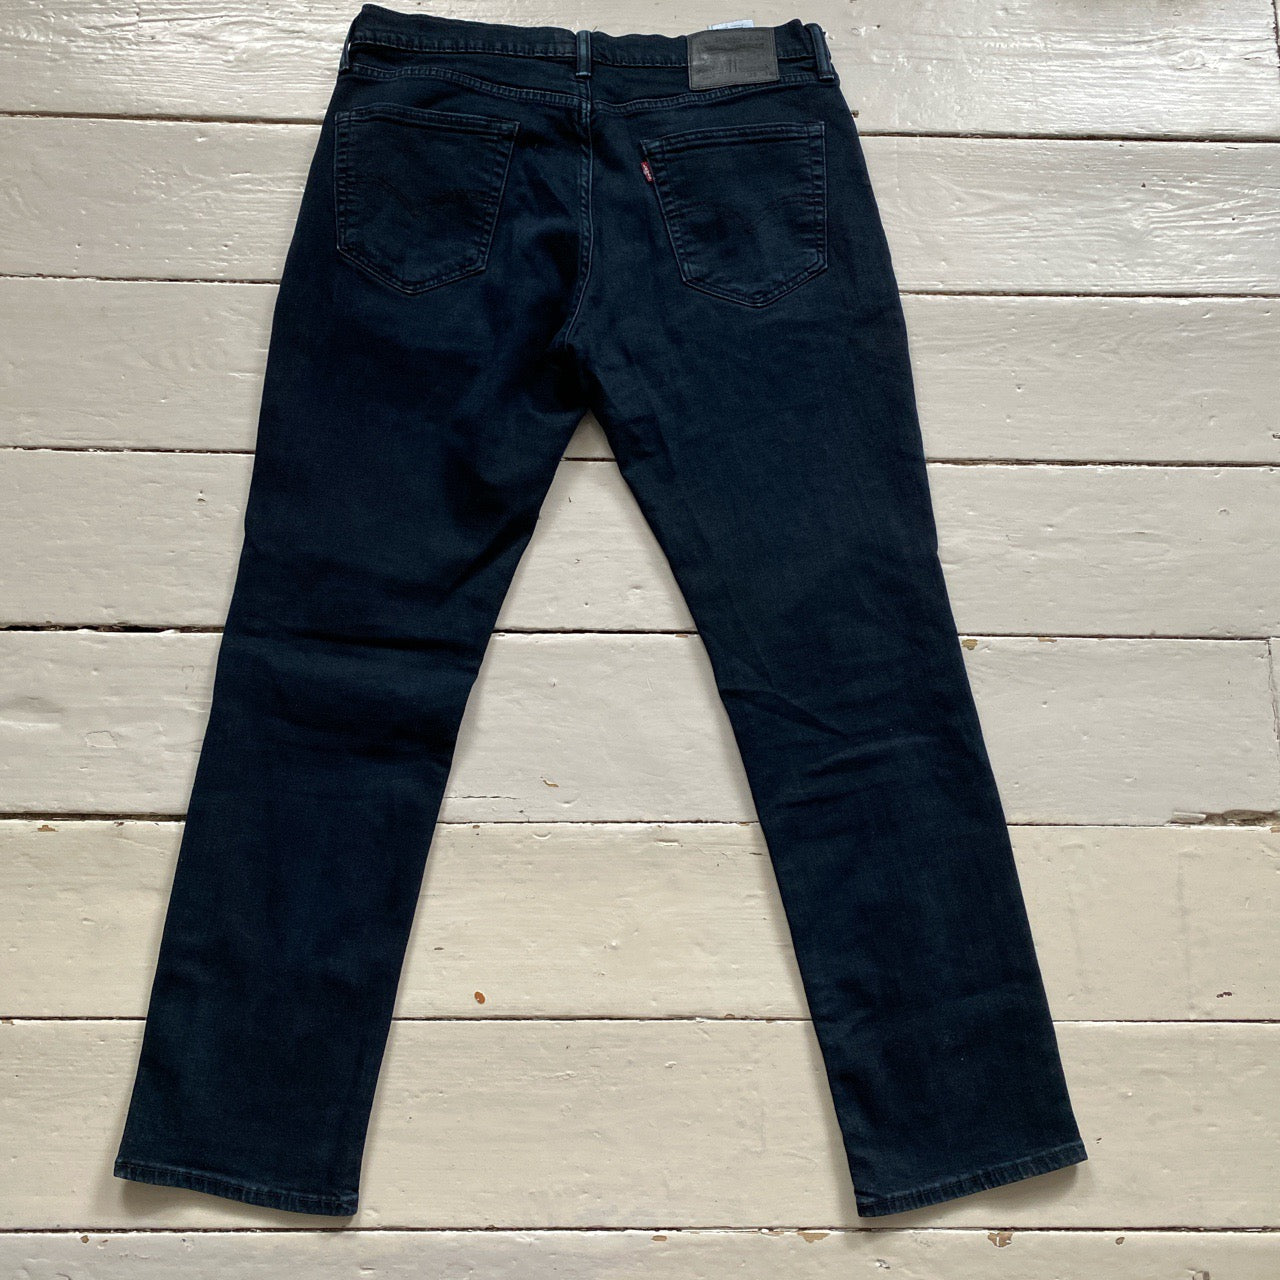 Levis 511 Slim Navy Jeans (36/30)